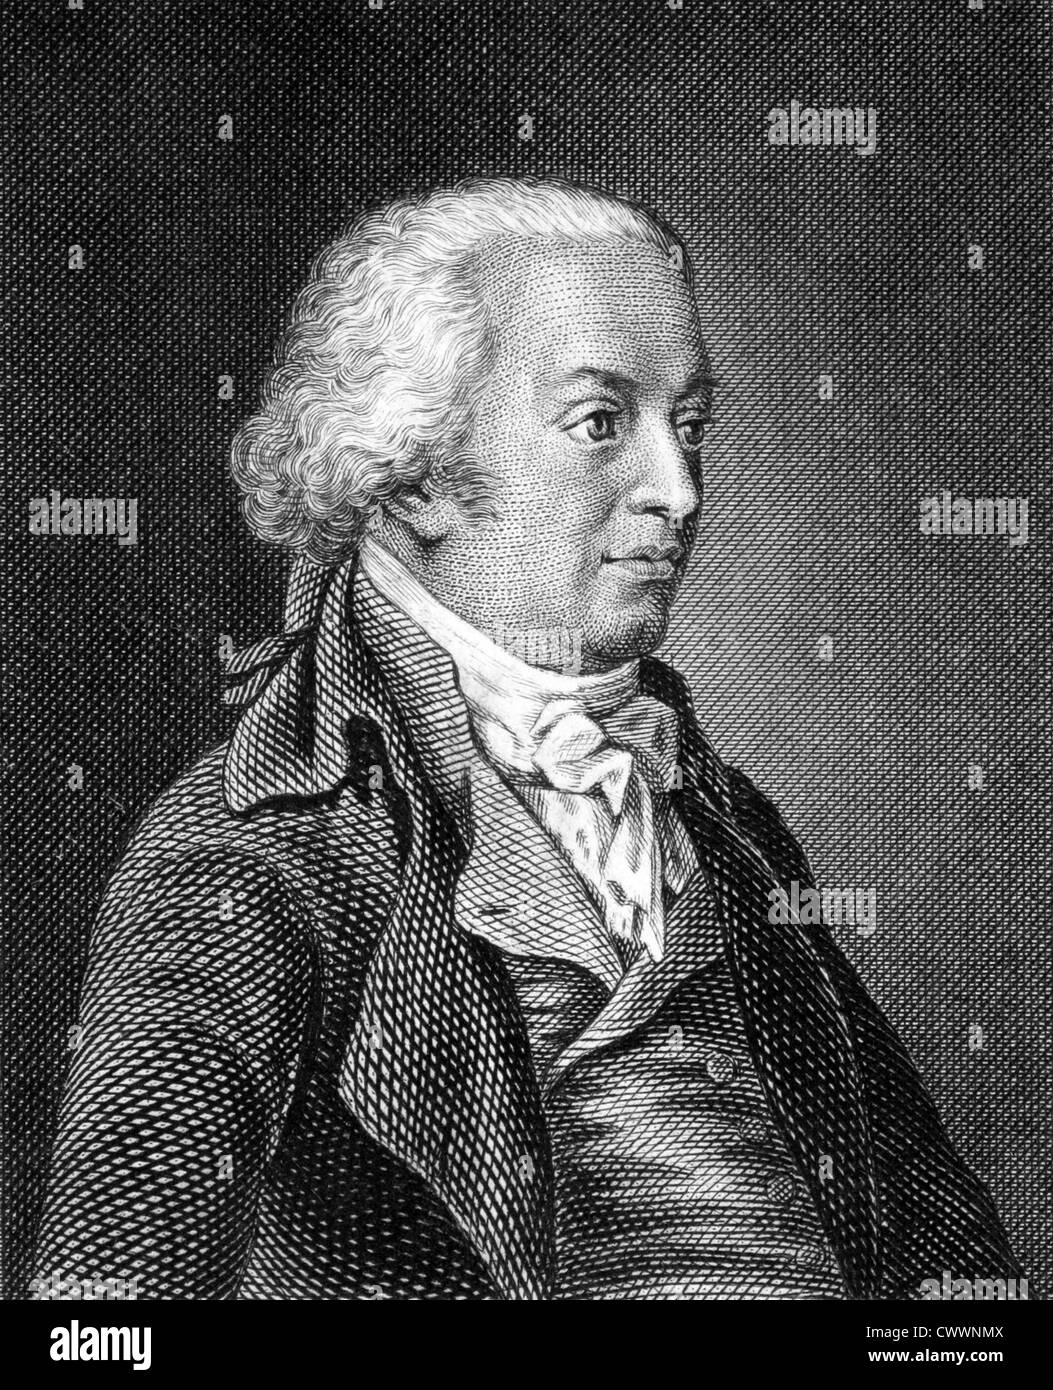 Johannes von Muller (1752-1809) on engraving from 1859. Swiss historian. Stock Photo